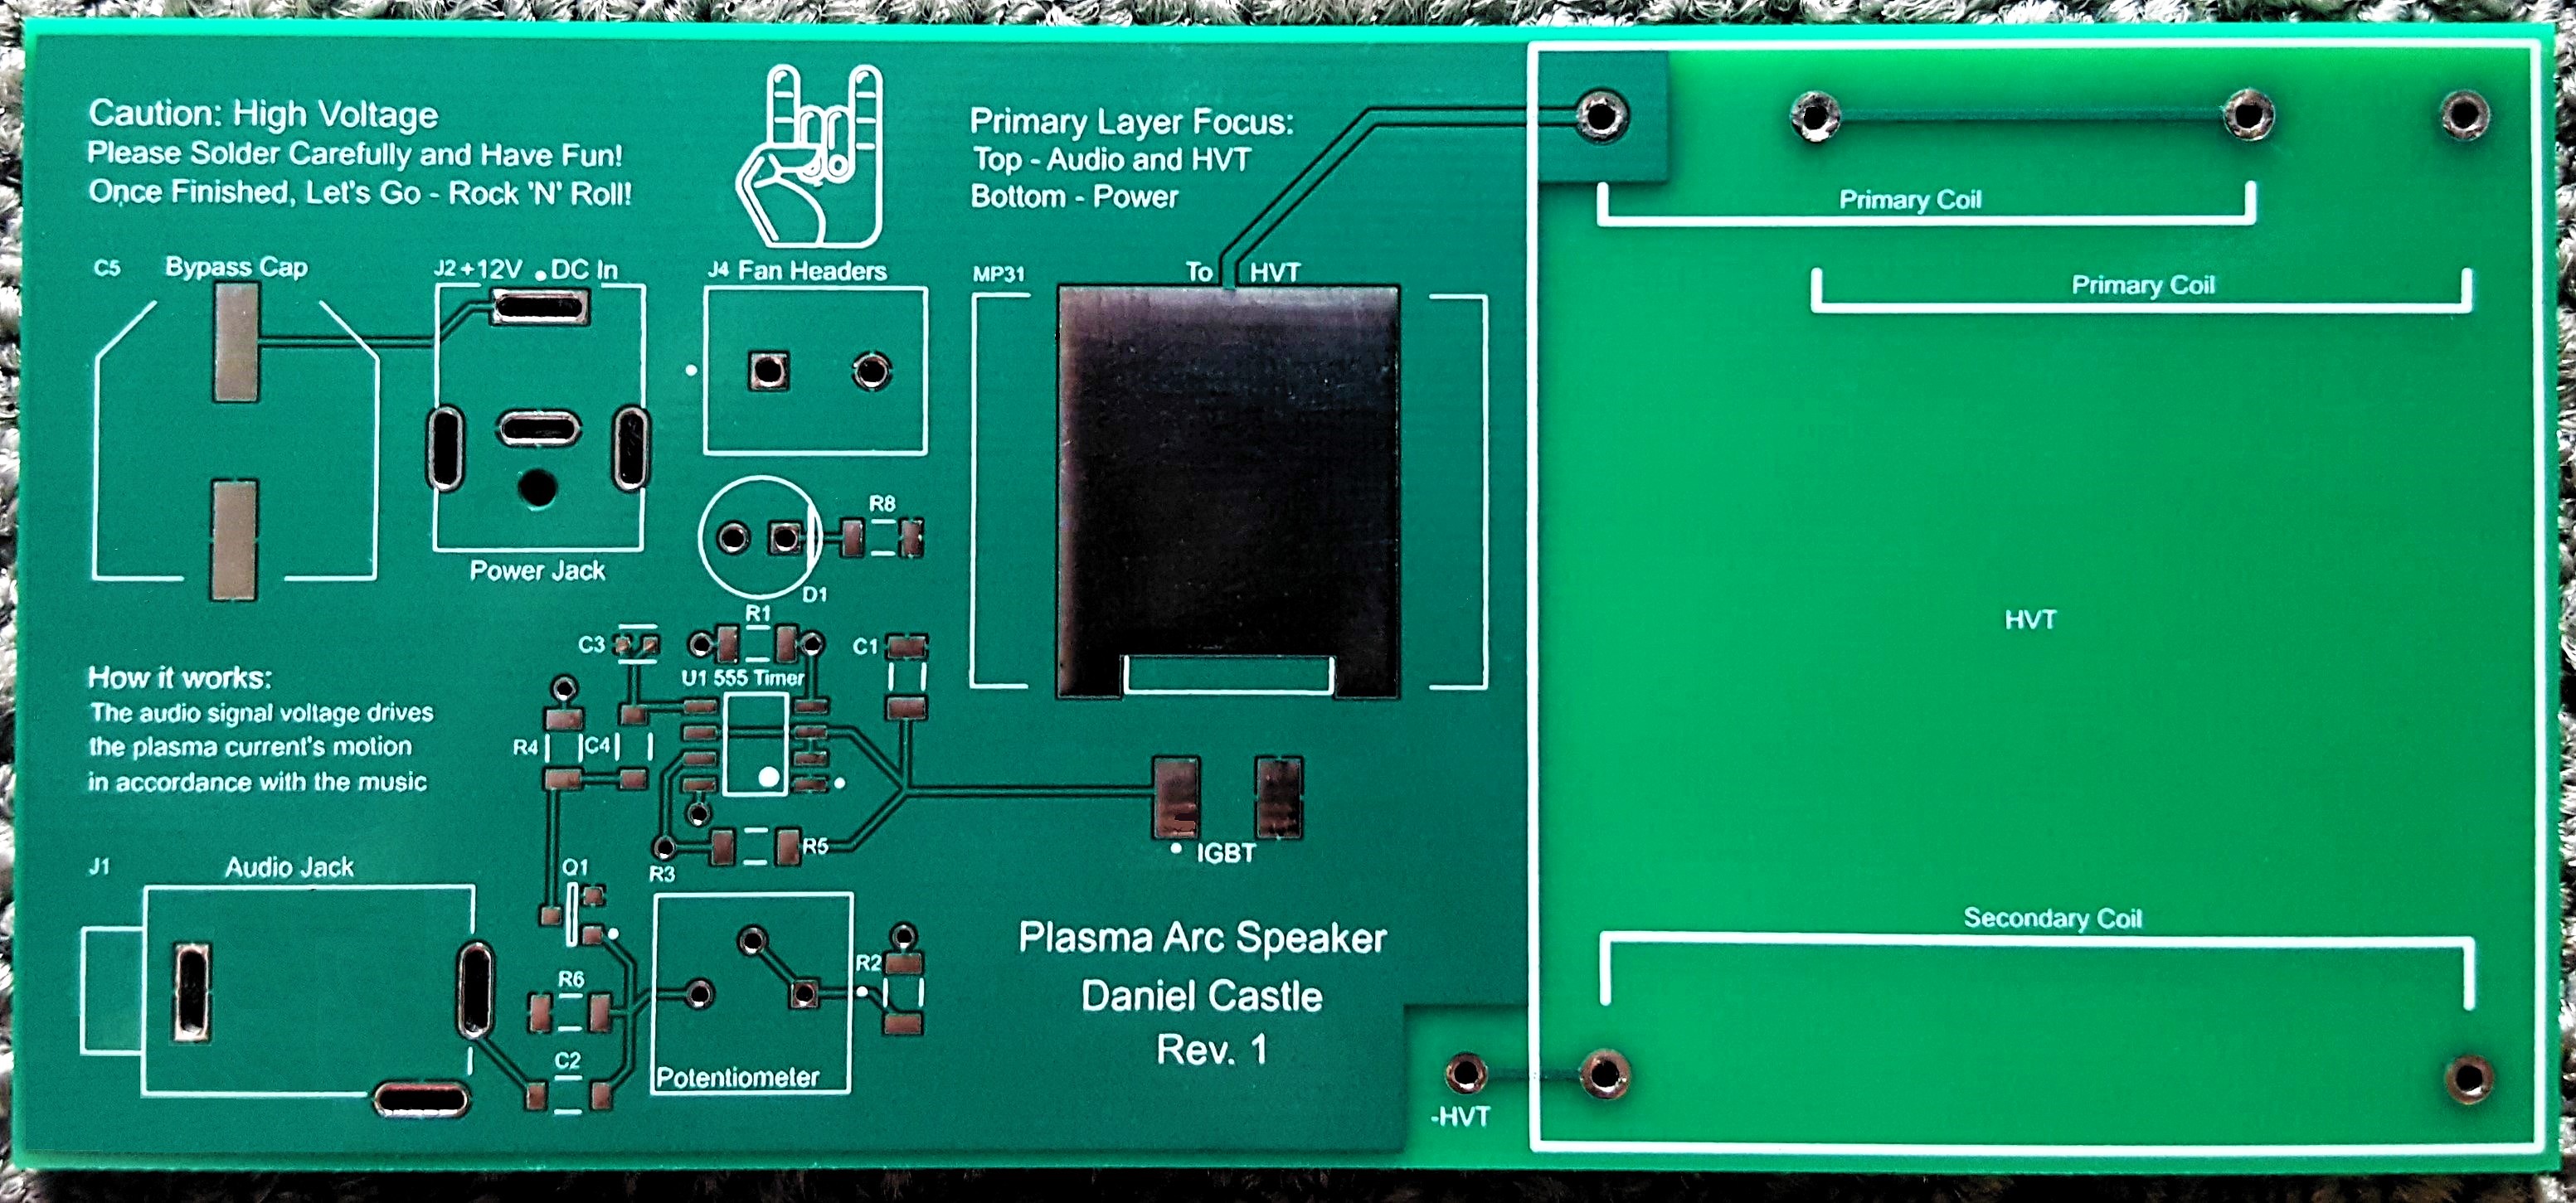 Plasma Arc Speaker Printed Top Layer